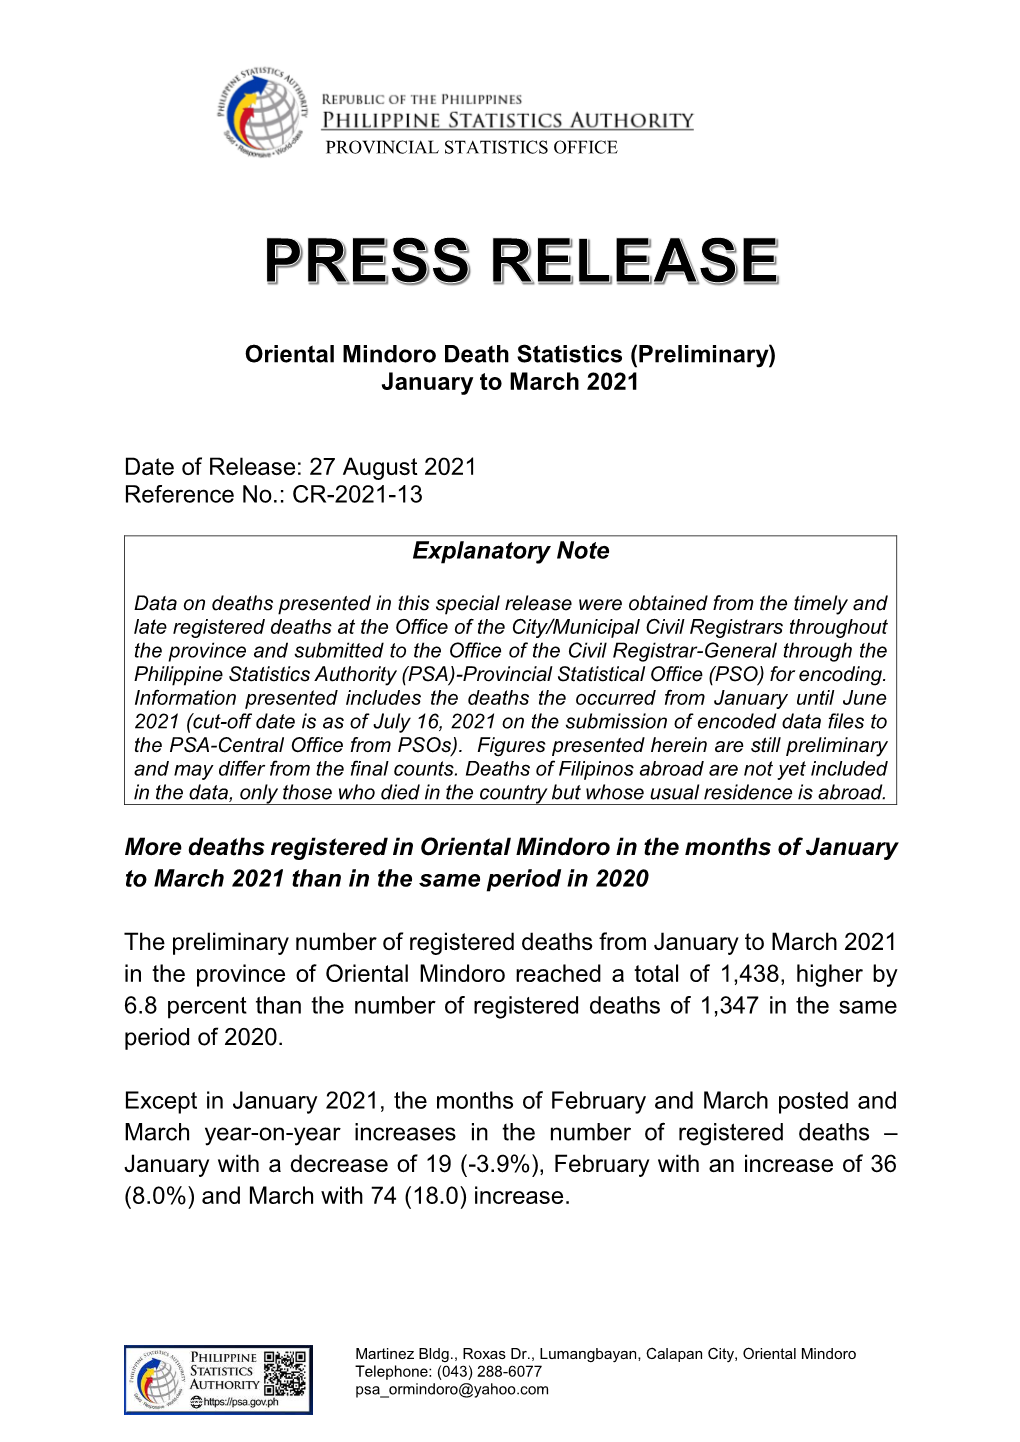 Oriental Mindoro Death Statistics (Preliminary) January to March 2021